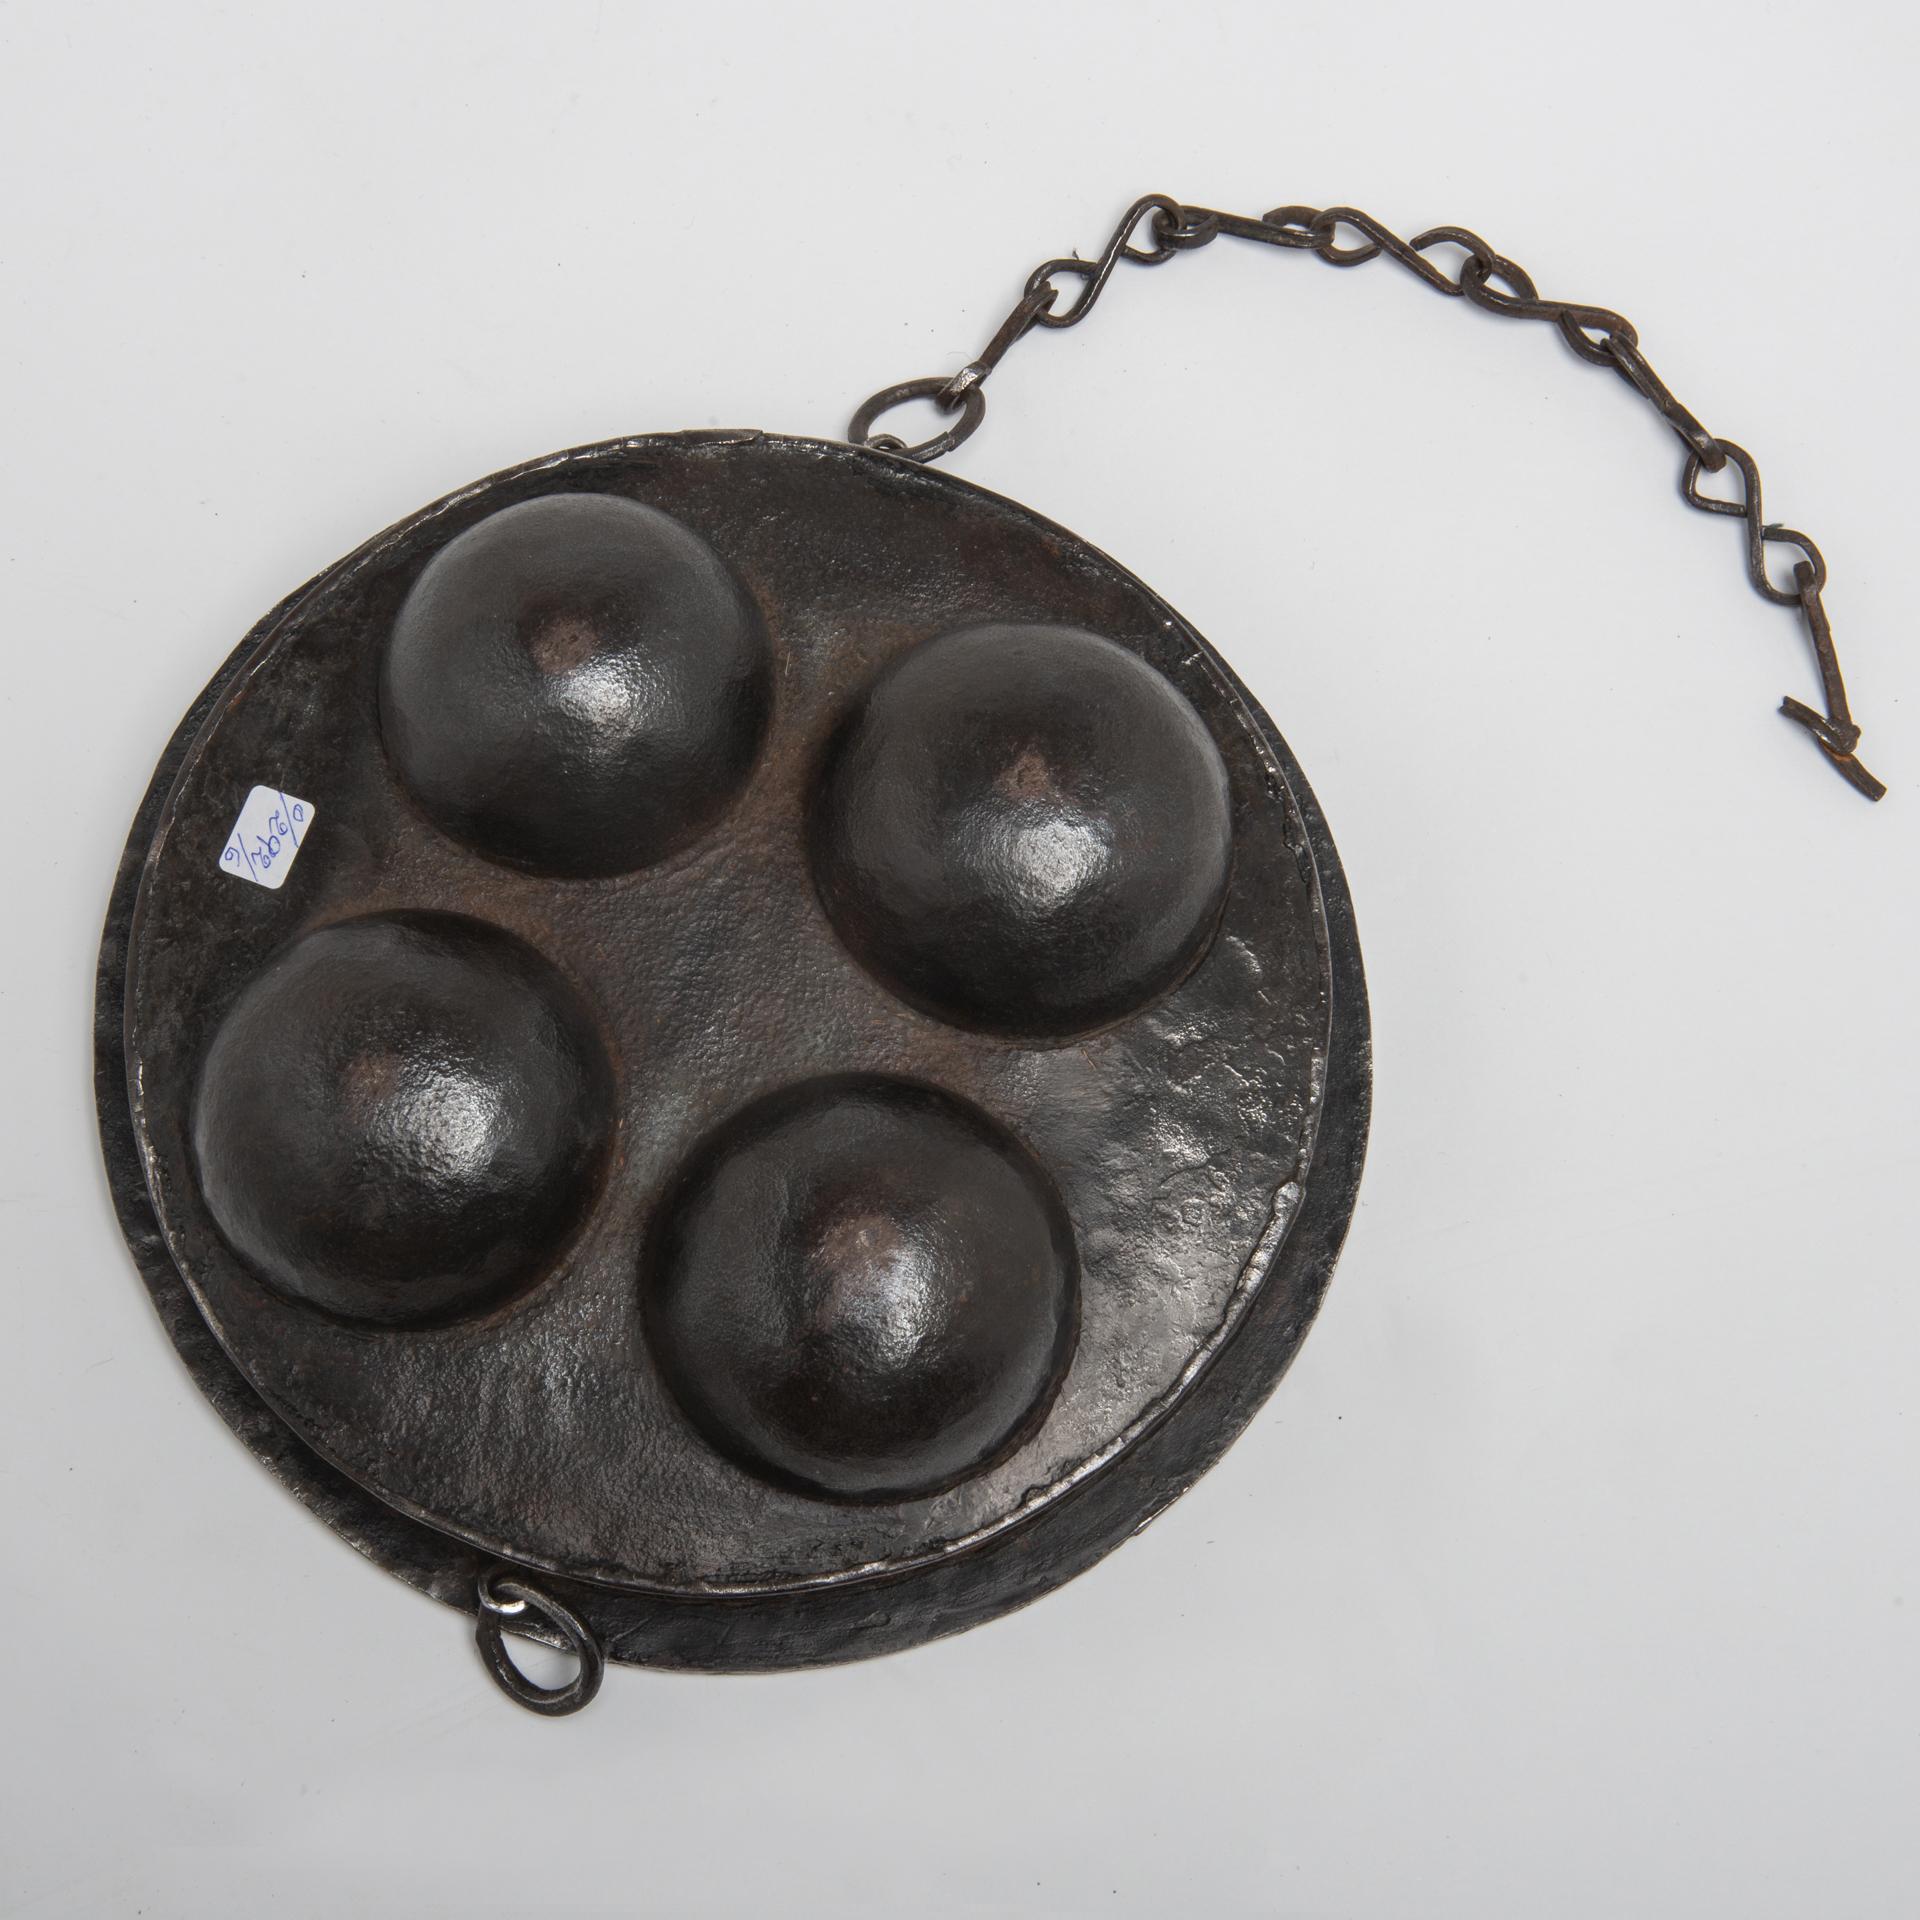 Tibetan Antique Strange Iron Pot with Chain For Sale